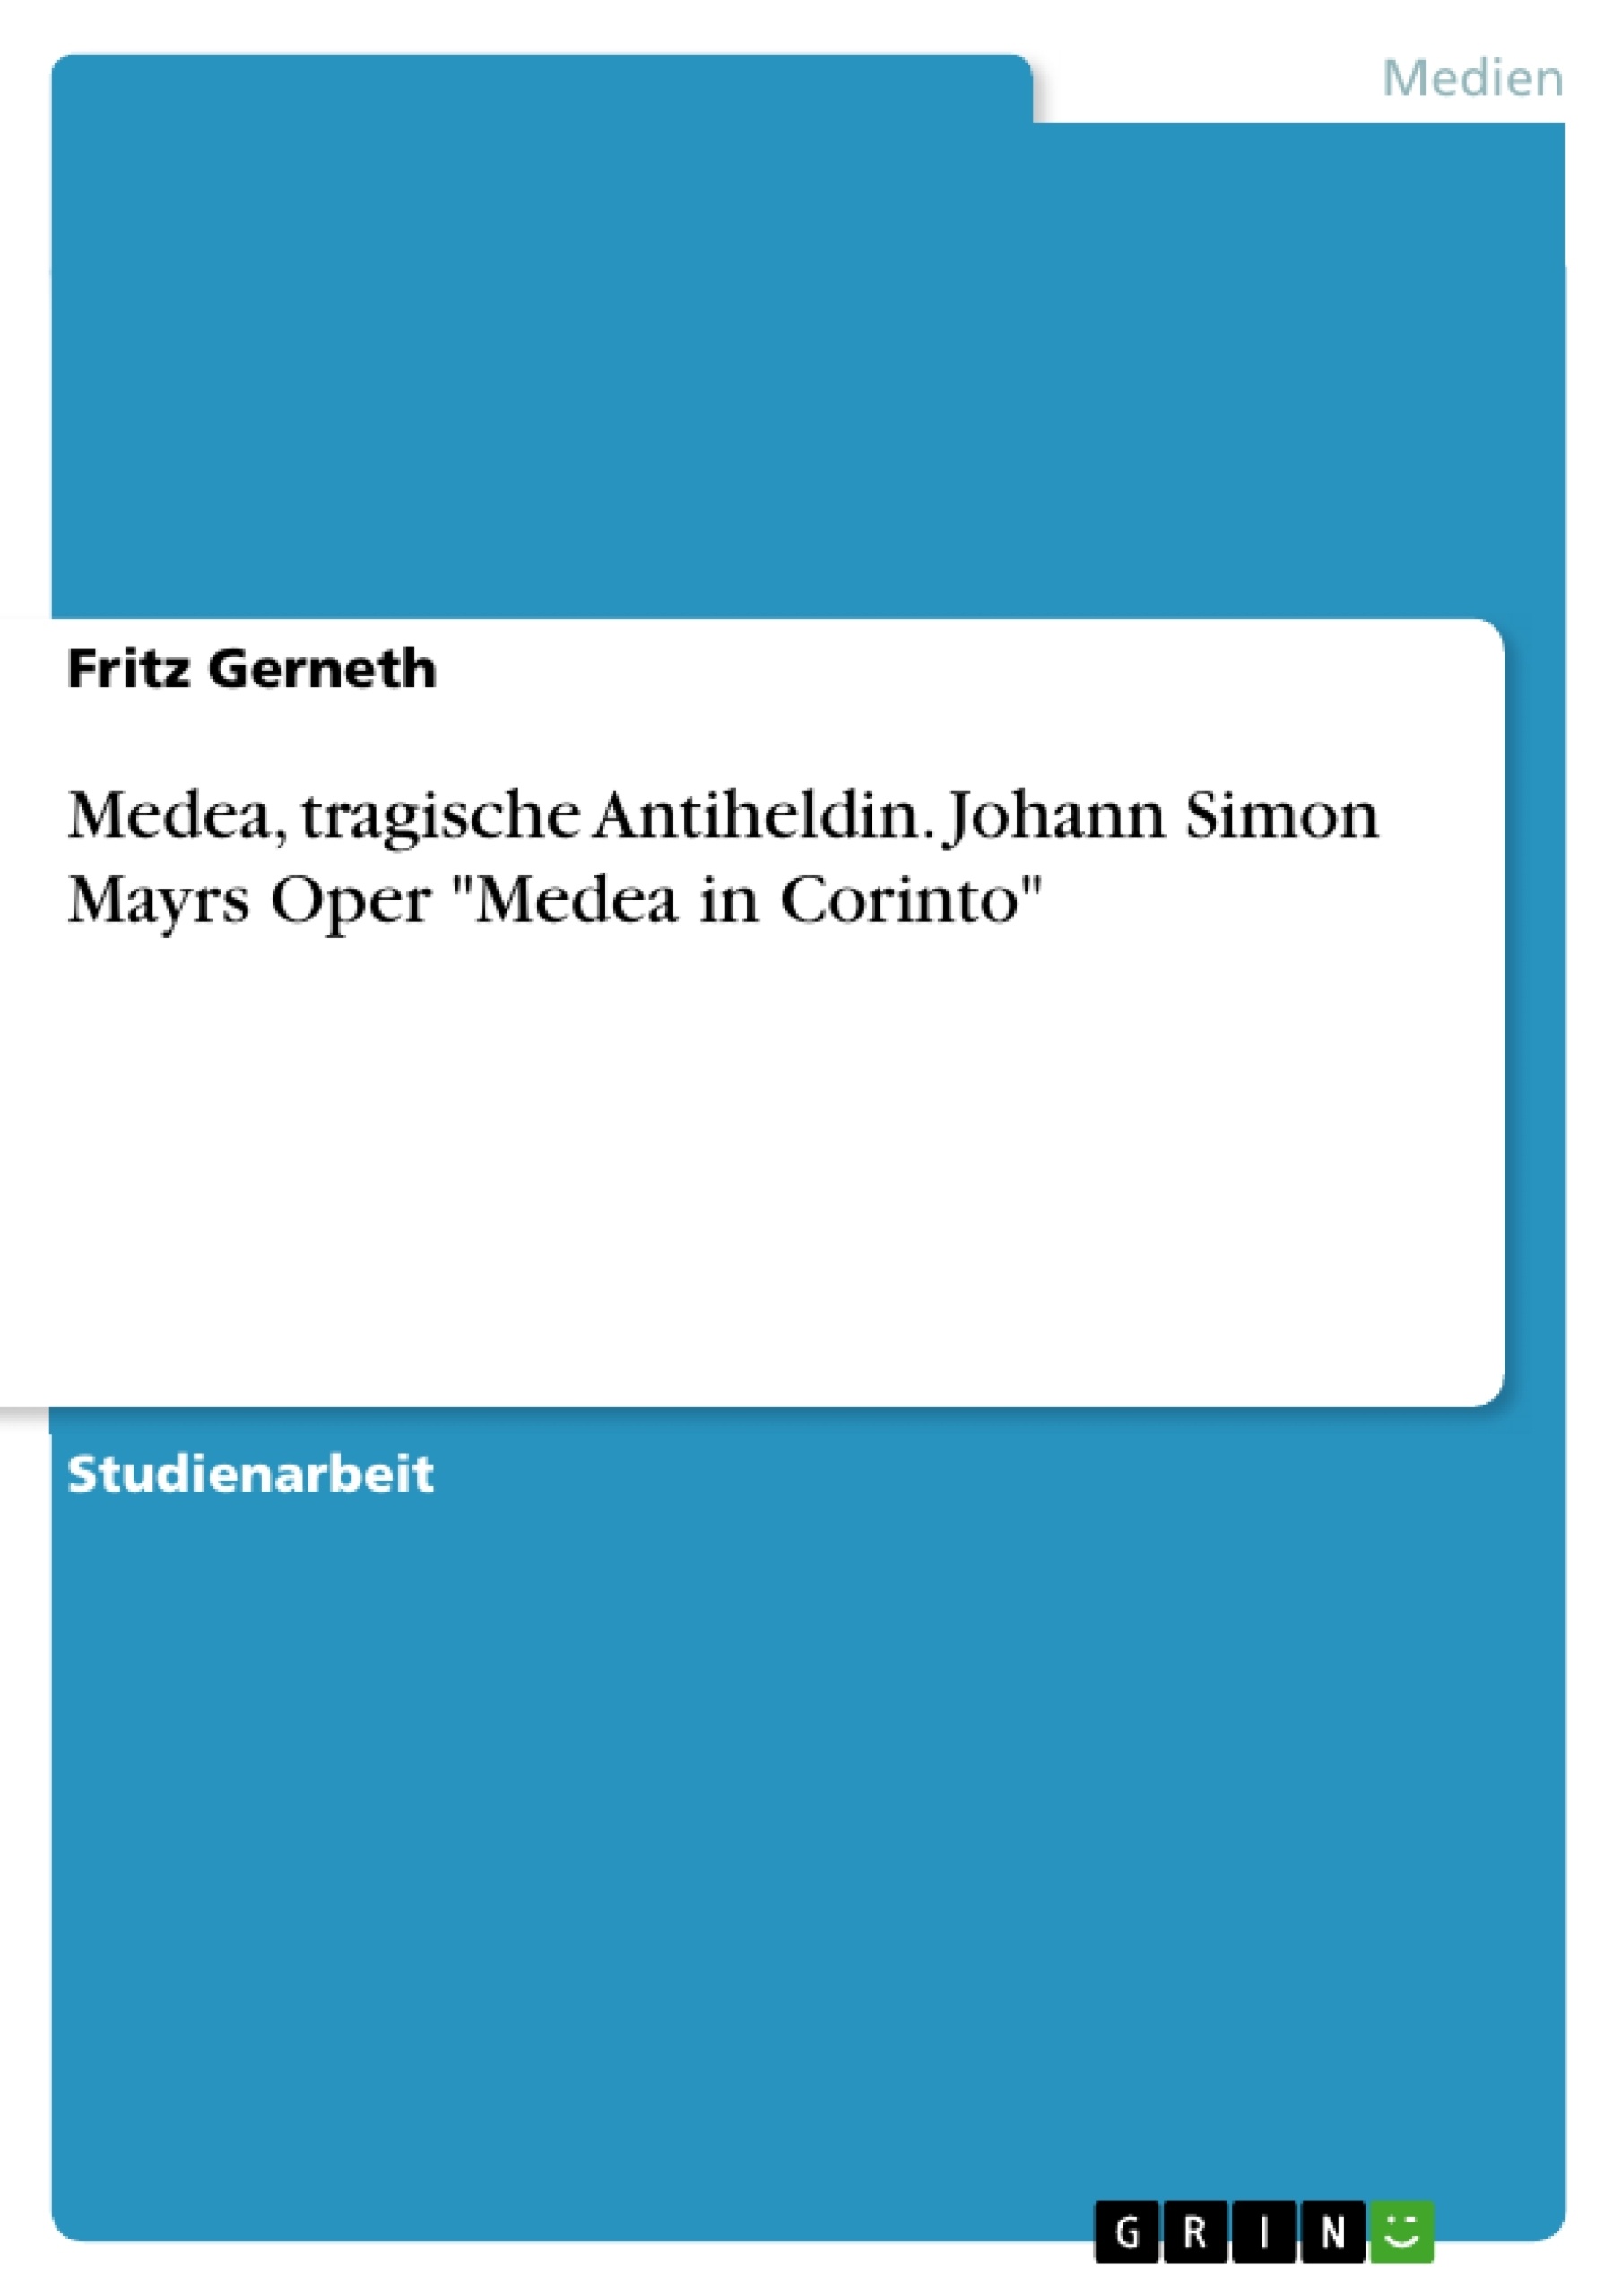 Titre: Medea, tragische Antiheldin. Johann Simon Mayrs Oper "Medea in Corinto"